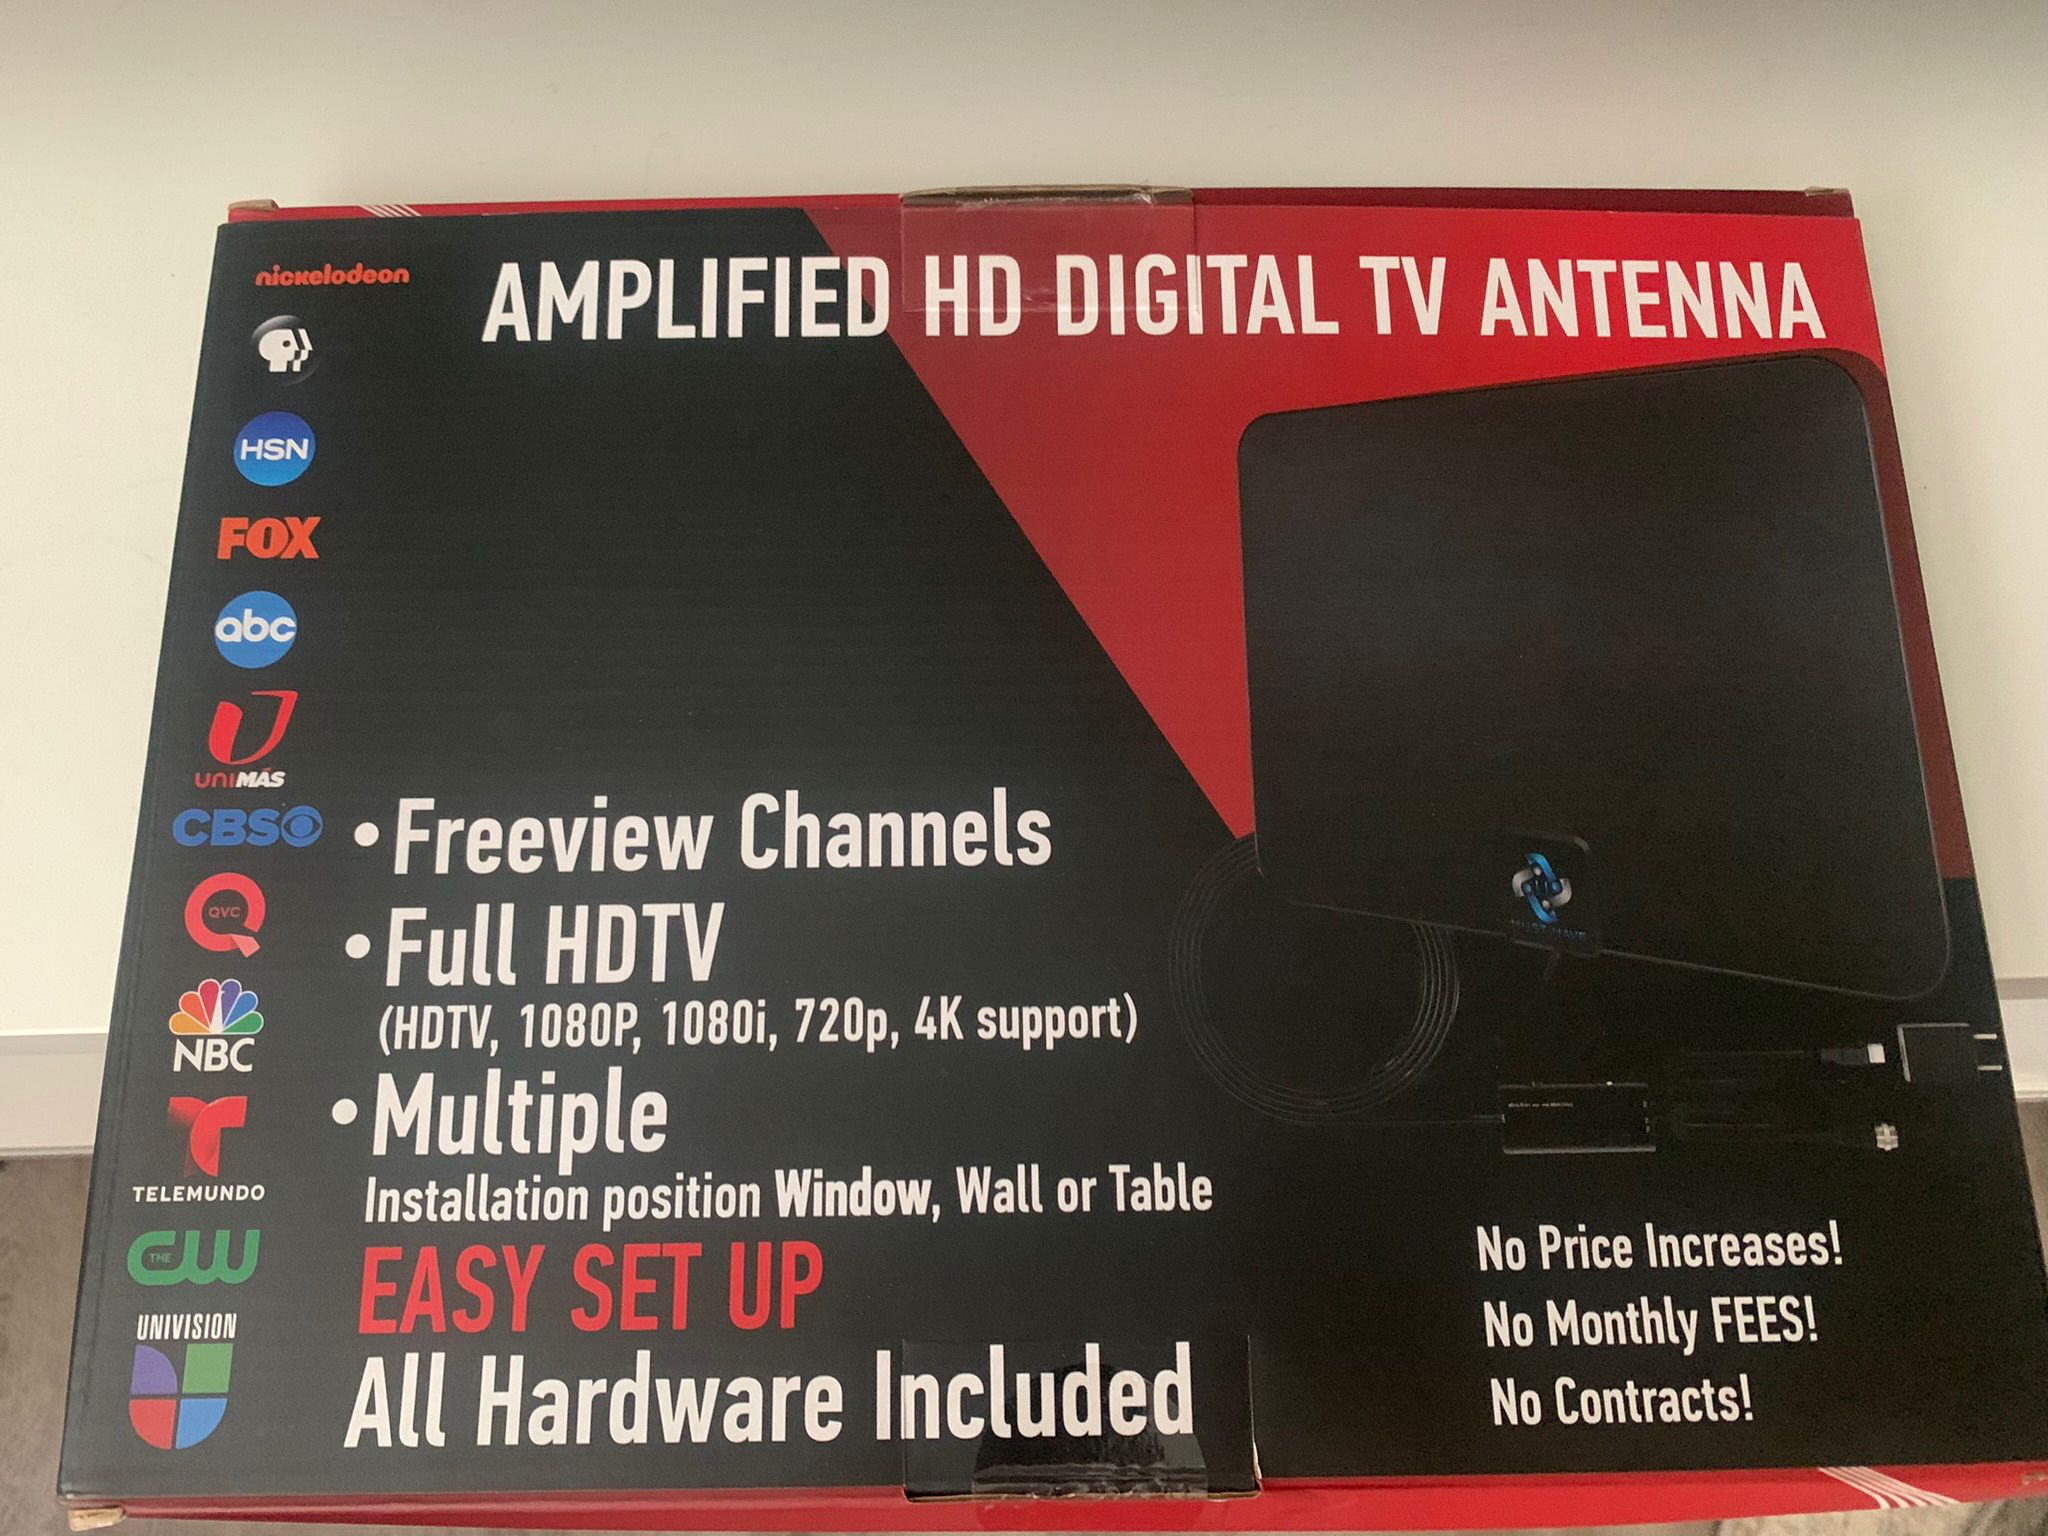 AMPLIFIED HD DIGITAL TV ANTENNA